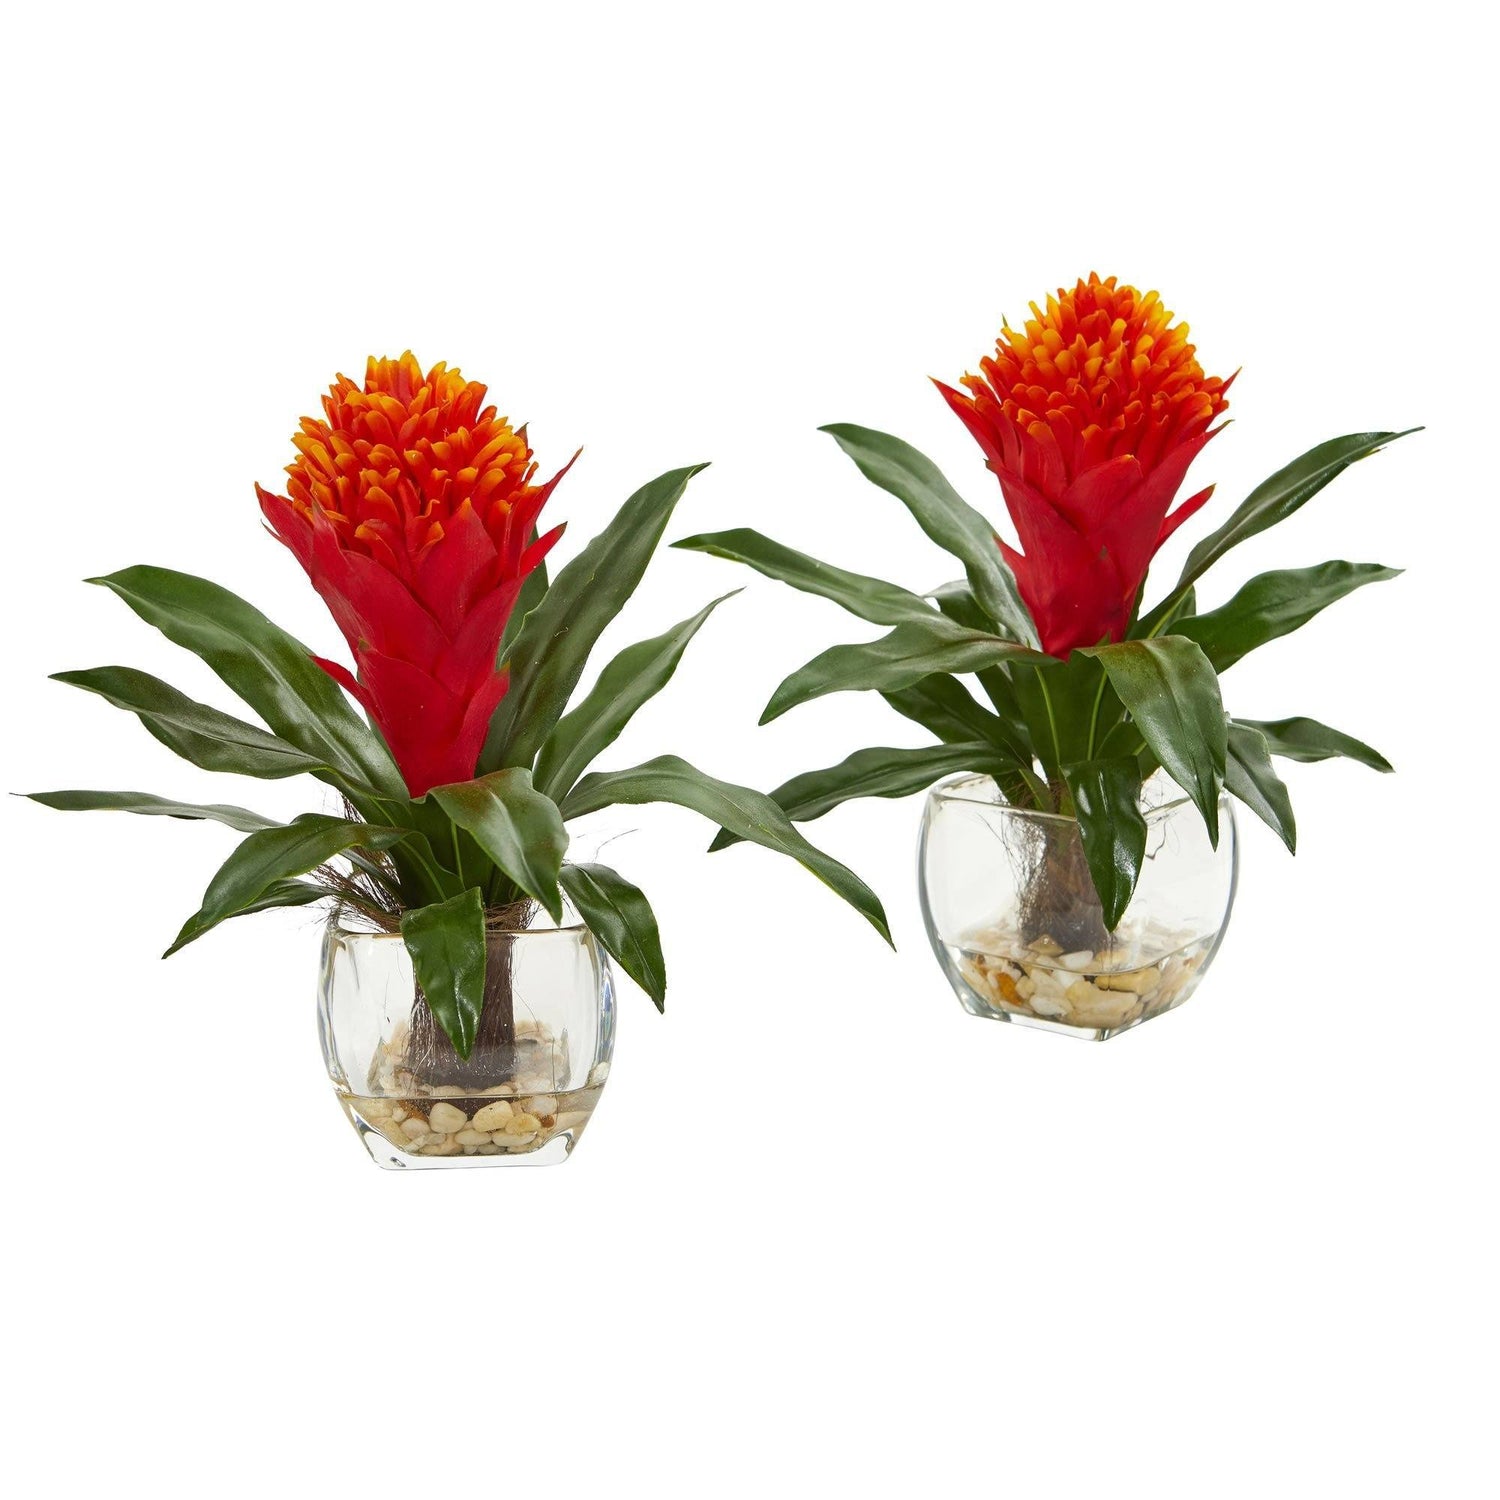 Bromeliad Artificial Plant in Vase (Set of 2)